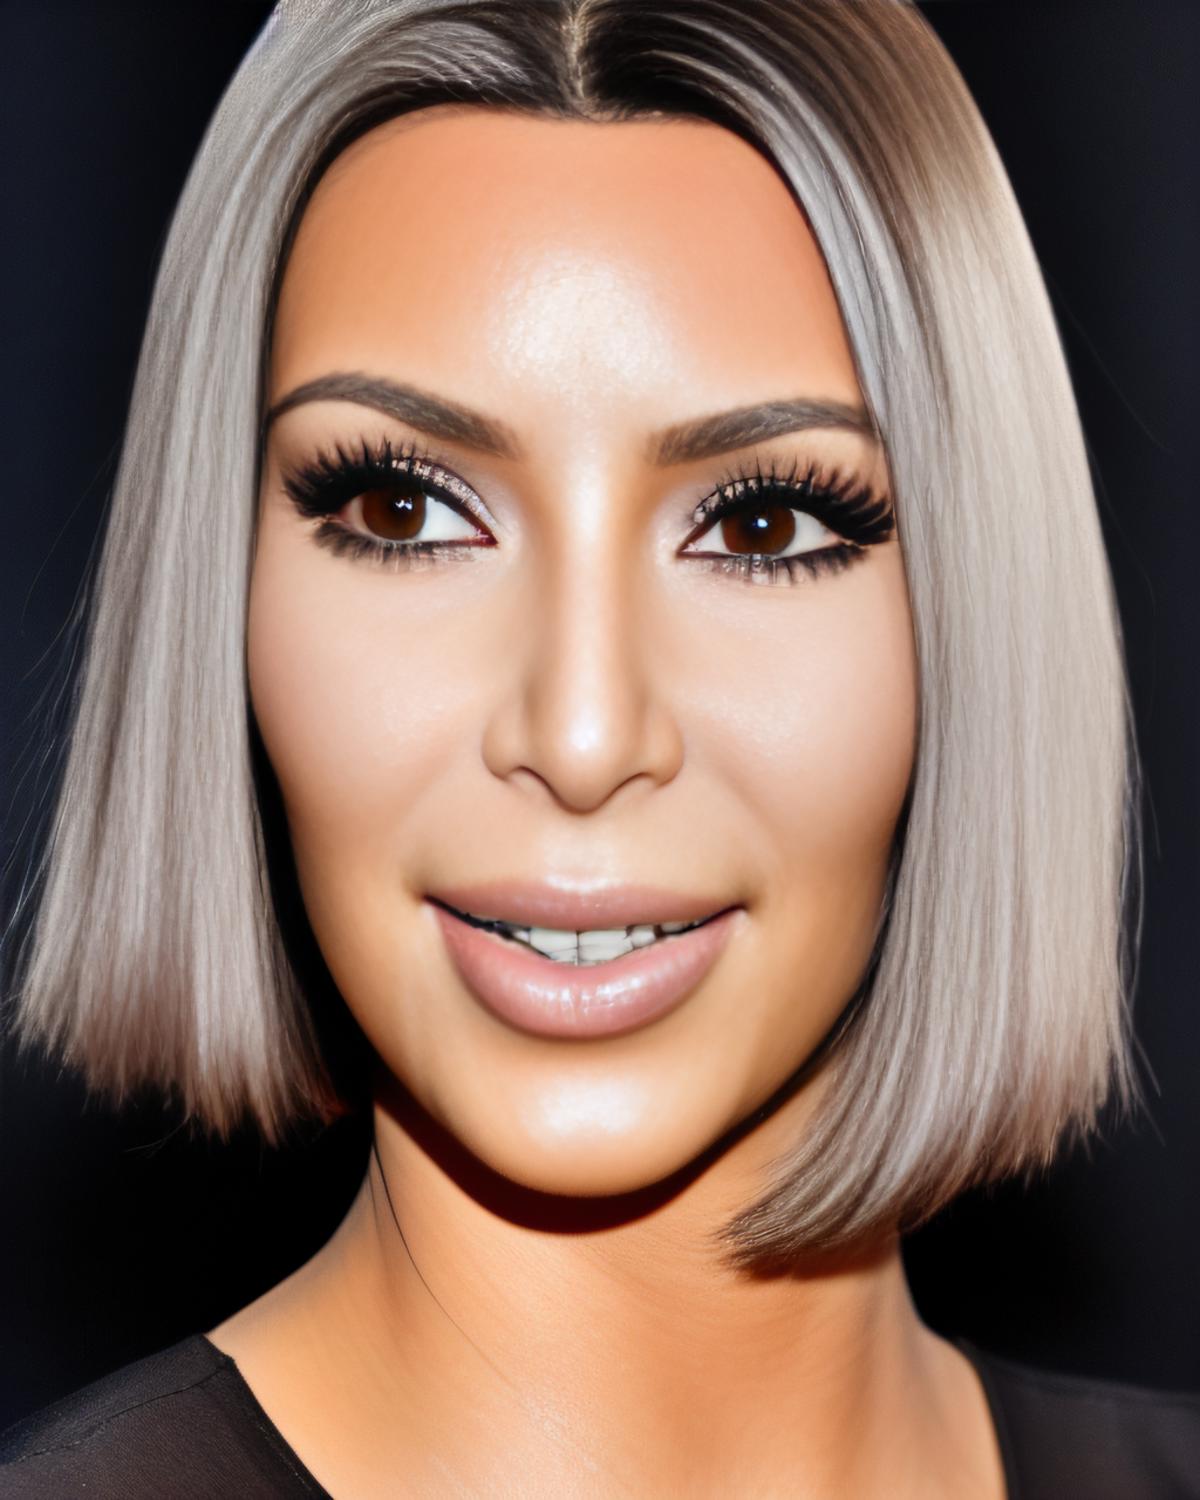 Kim Kardashian image by parar20